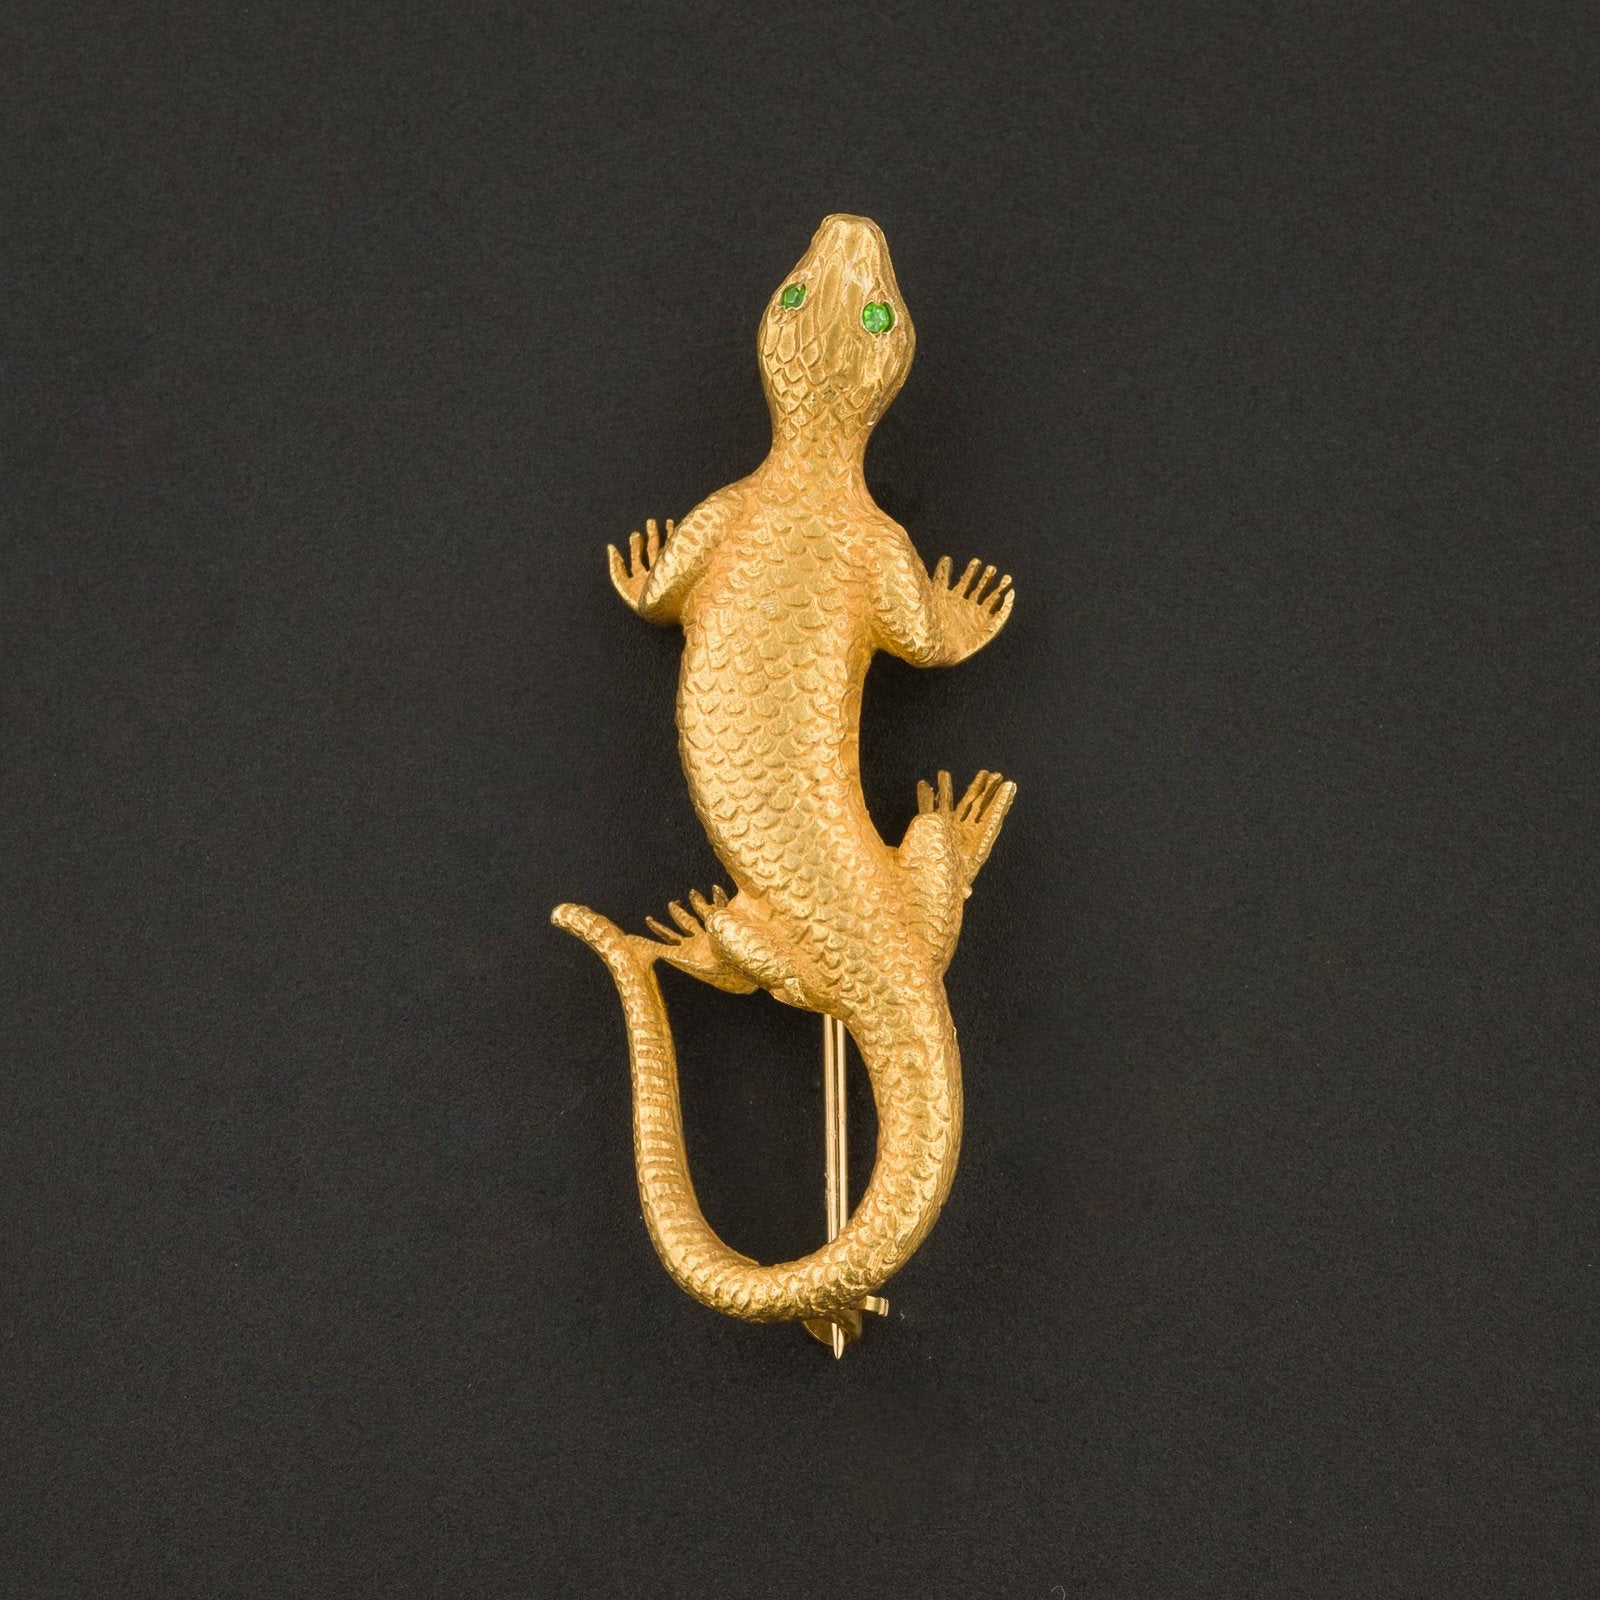 Antique Lizard Brooch | 14k Gold Brooch | Lizard with Demantoid Garnet Eyes